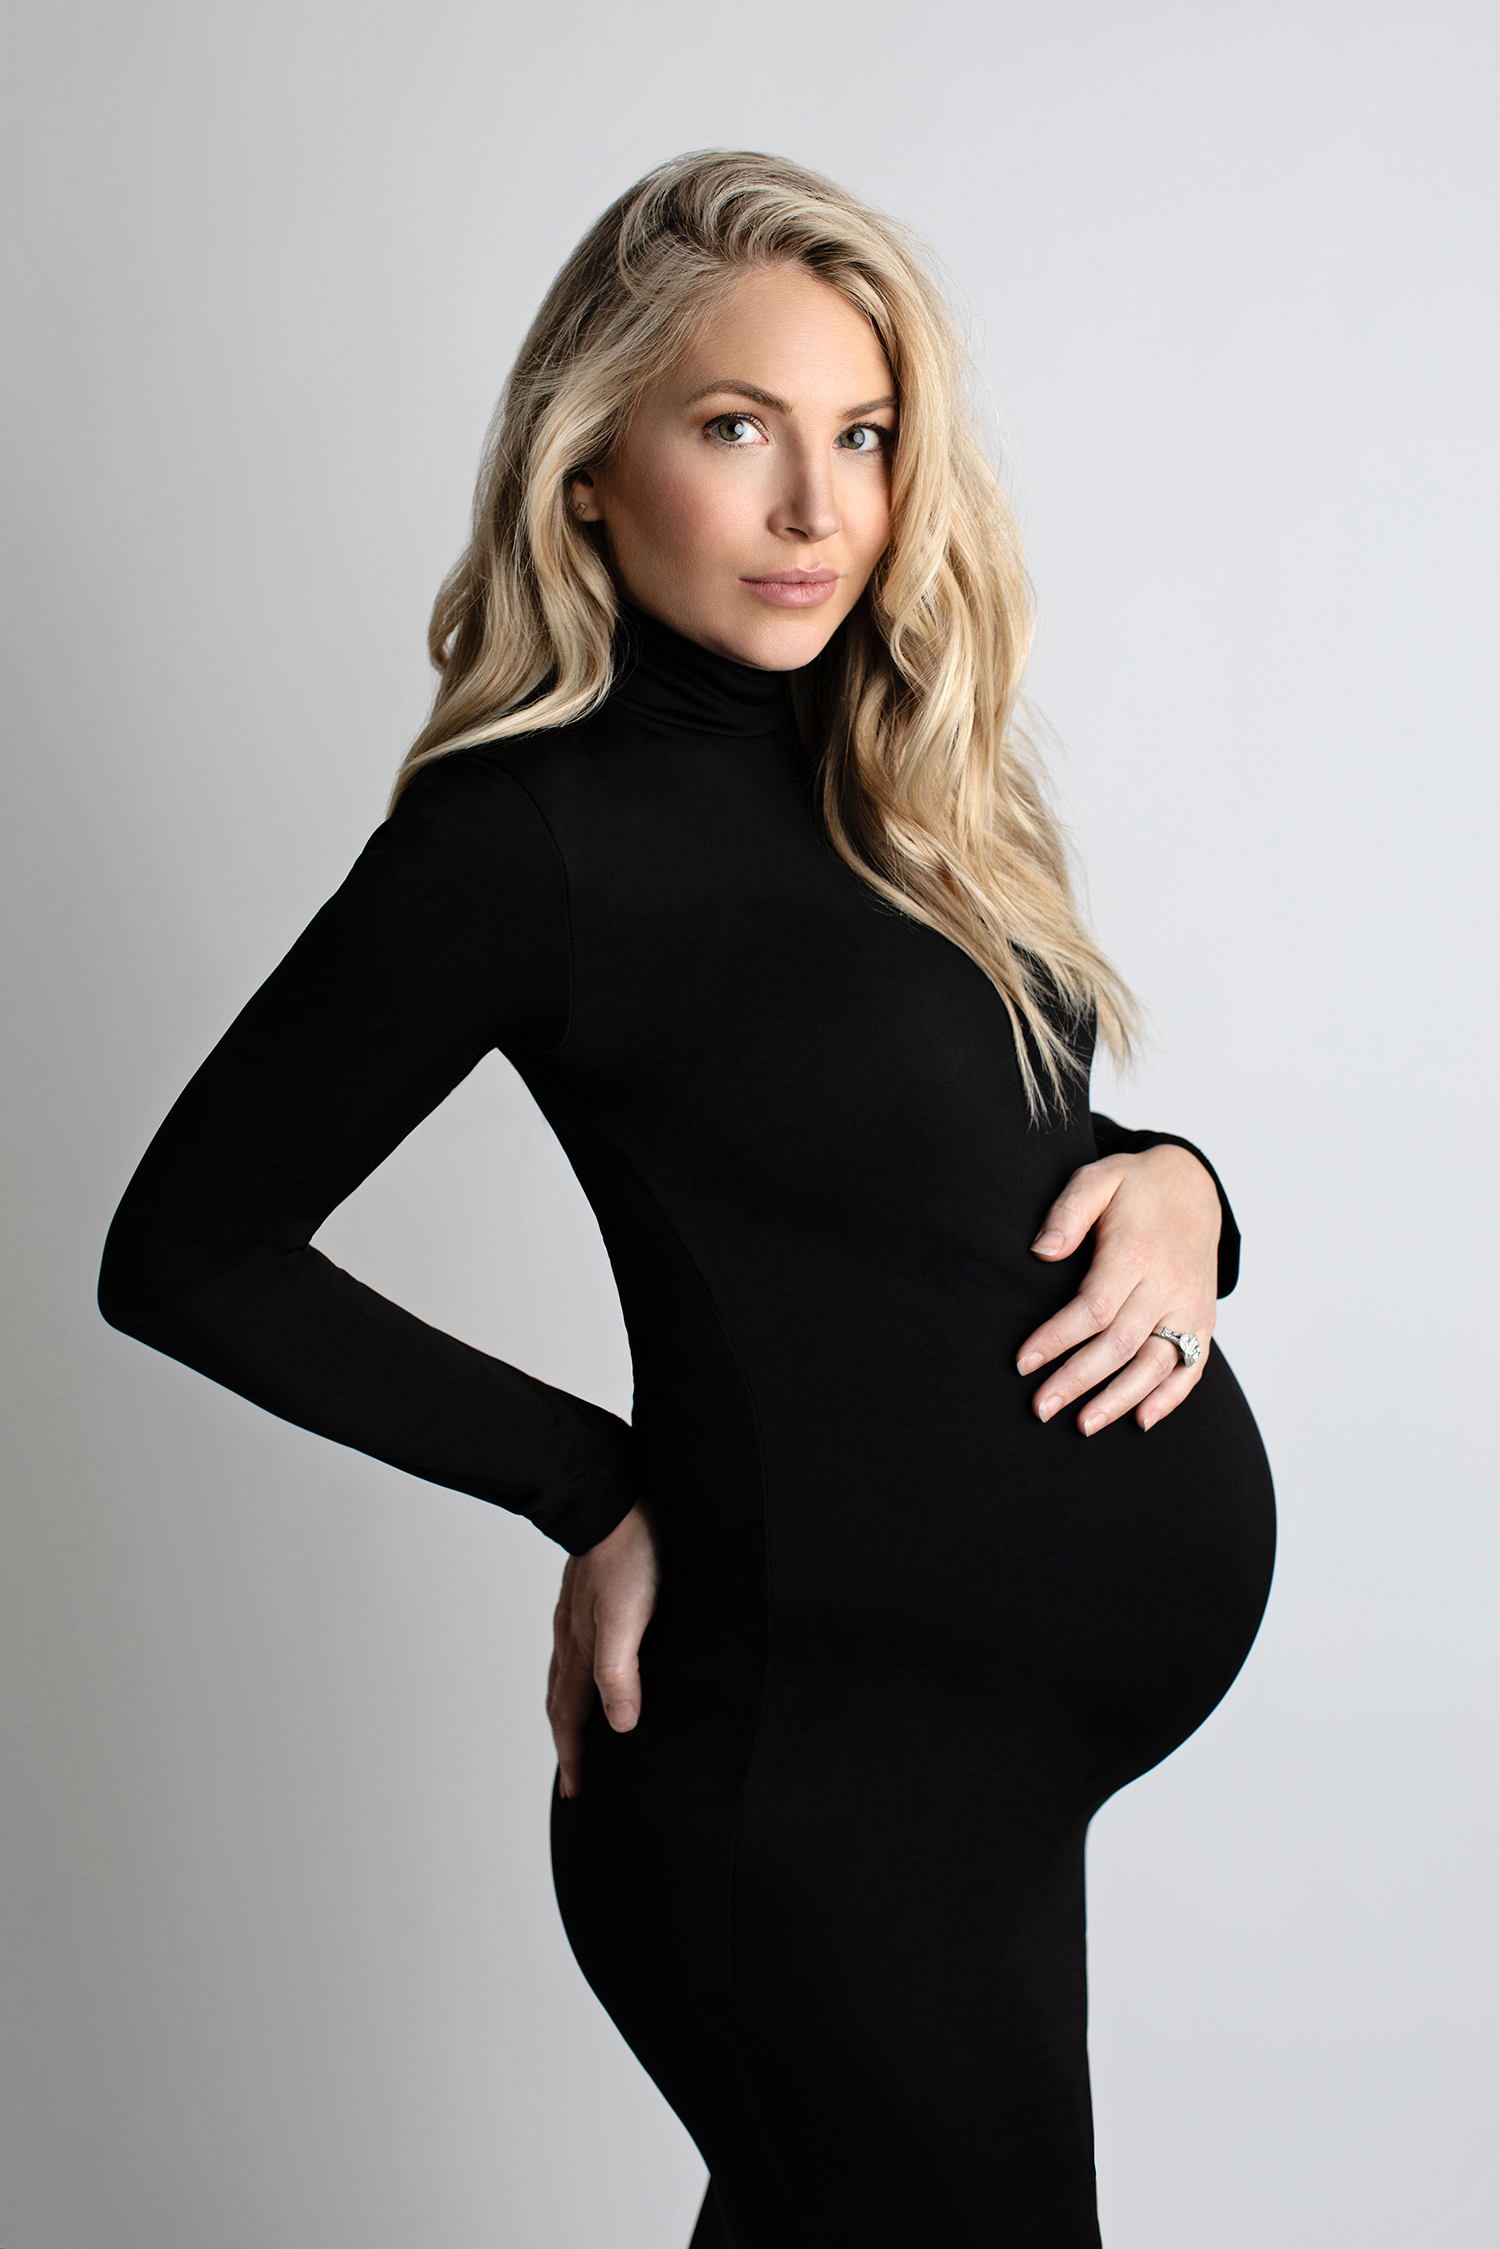 Fine art pregnancy photos of a woman in a black turtleneck dress.